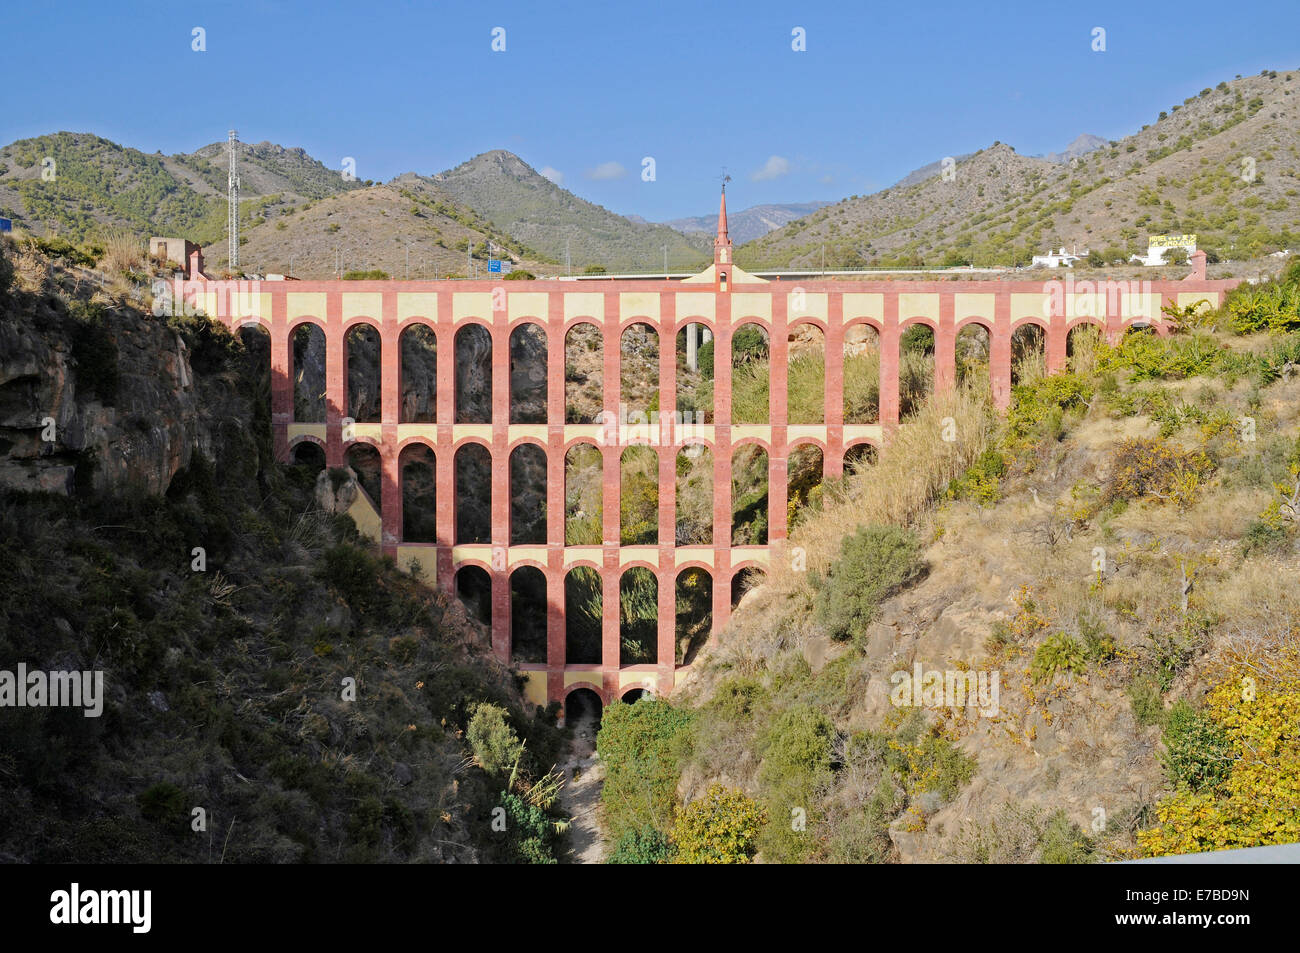 Acueducto del Aguila, aqueduc romain, Nerja, Malaga province, Andalusia, Spain Banque D'Images